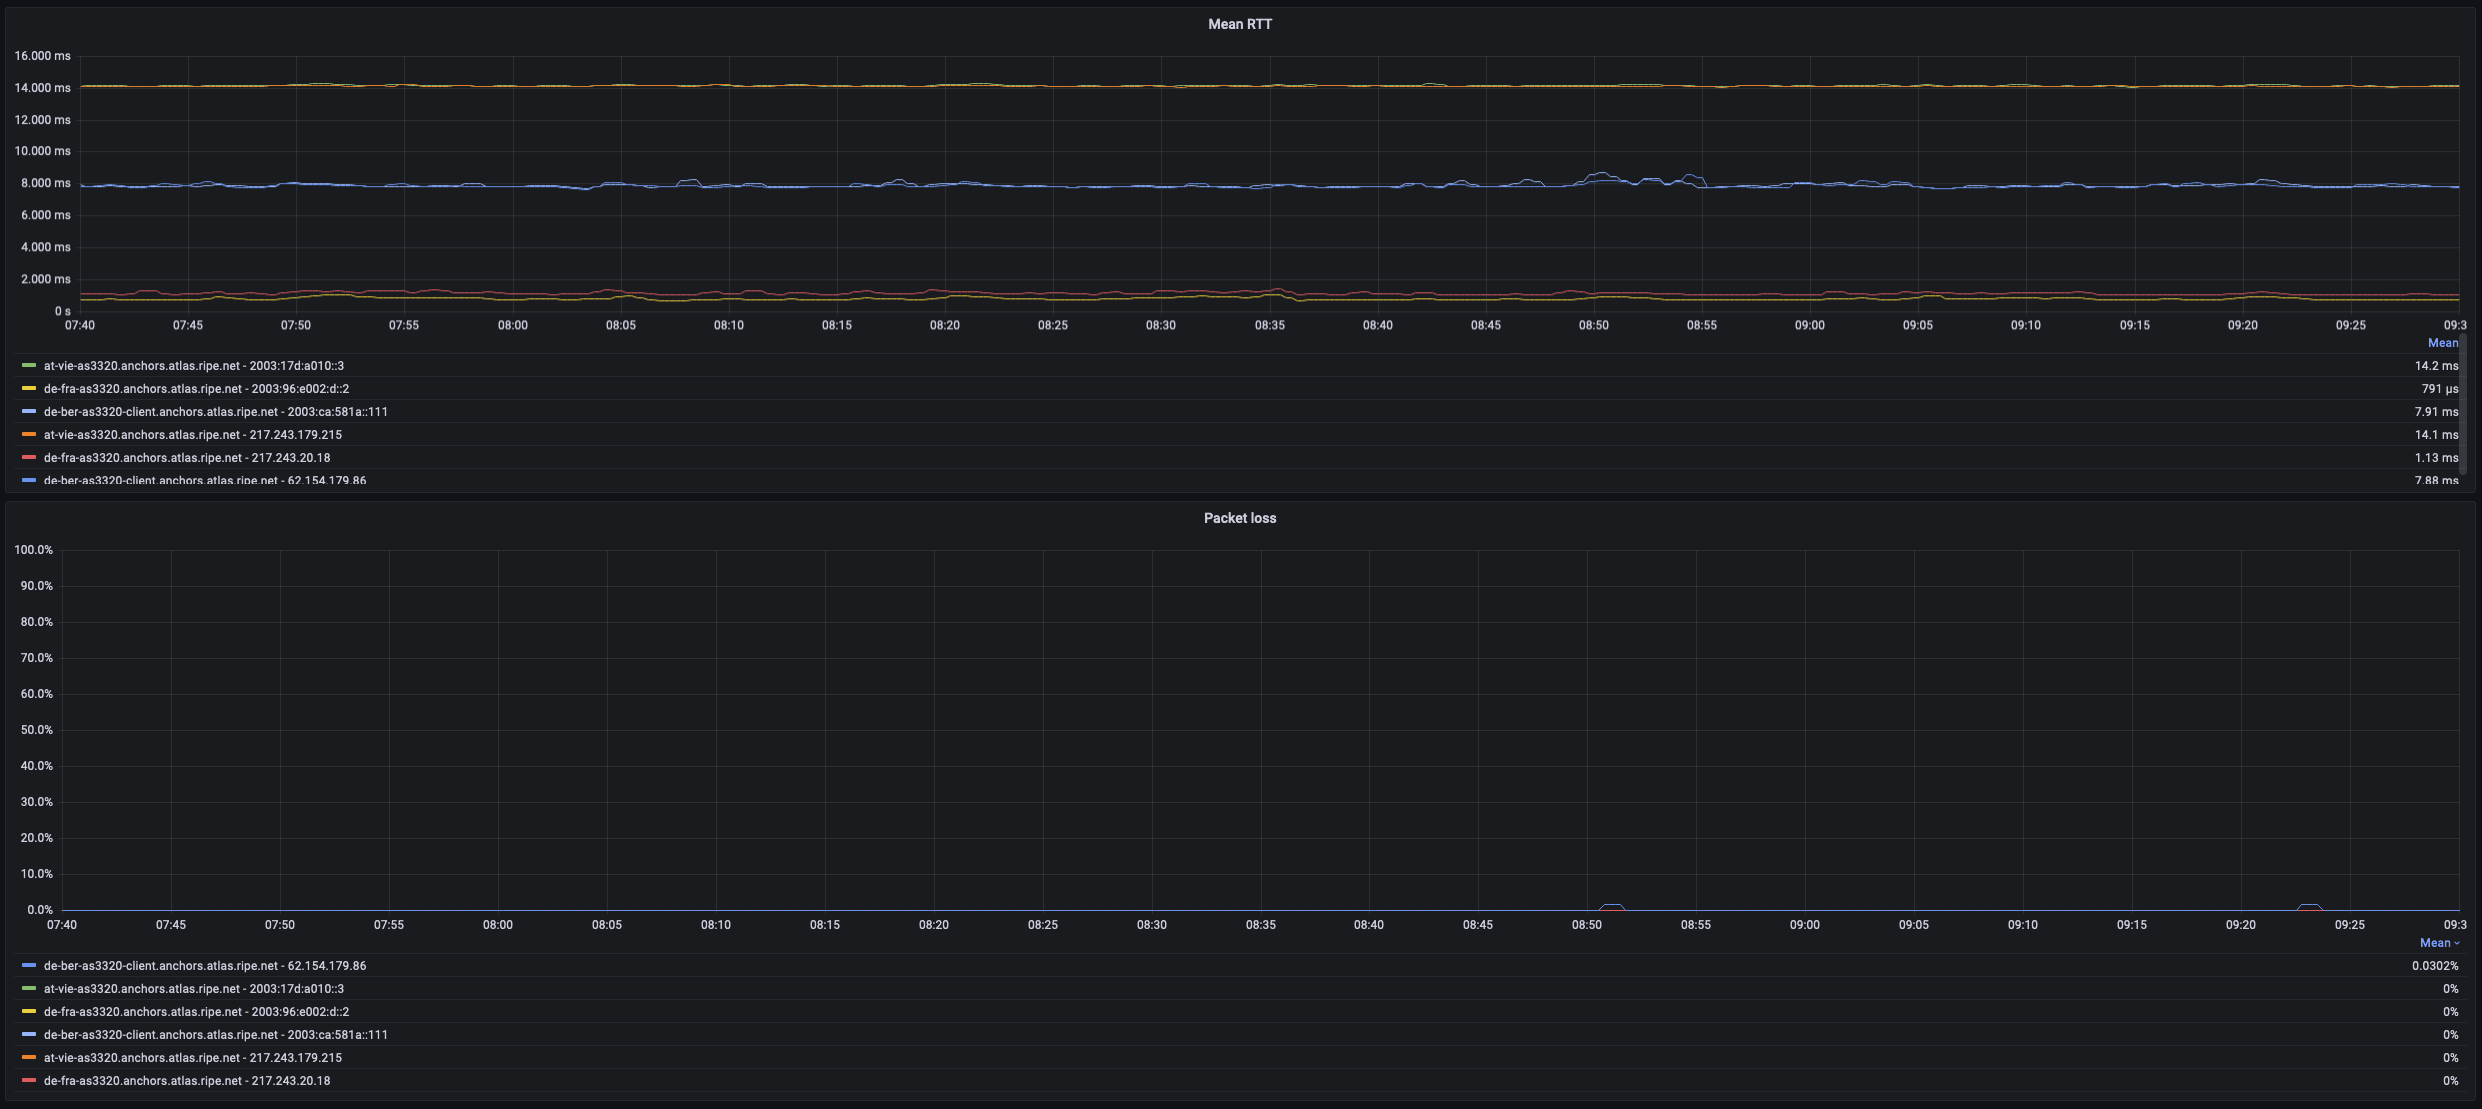 Grafana Dashboard showing normal latency and packetloss